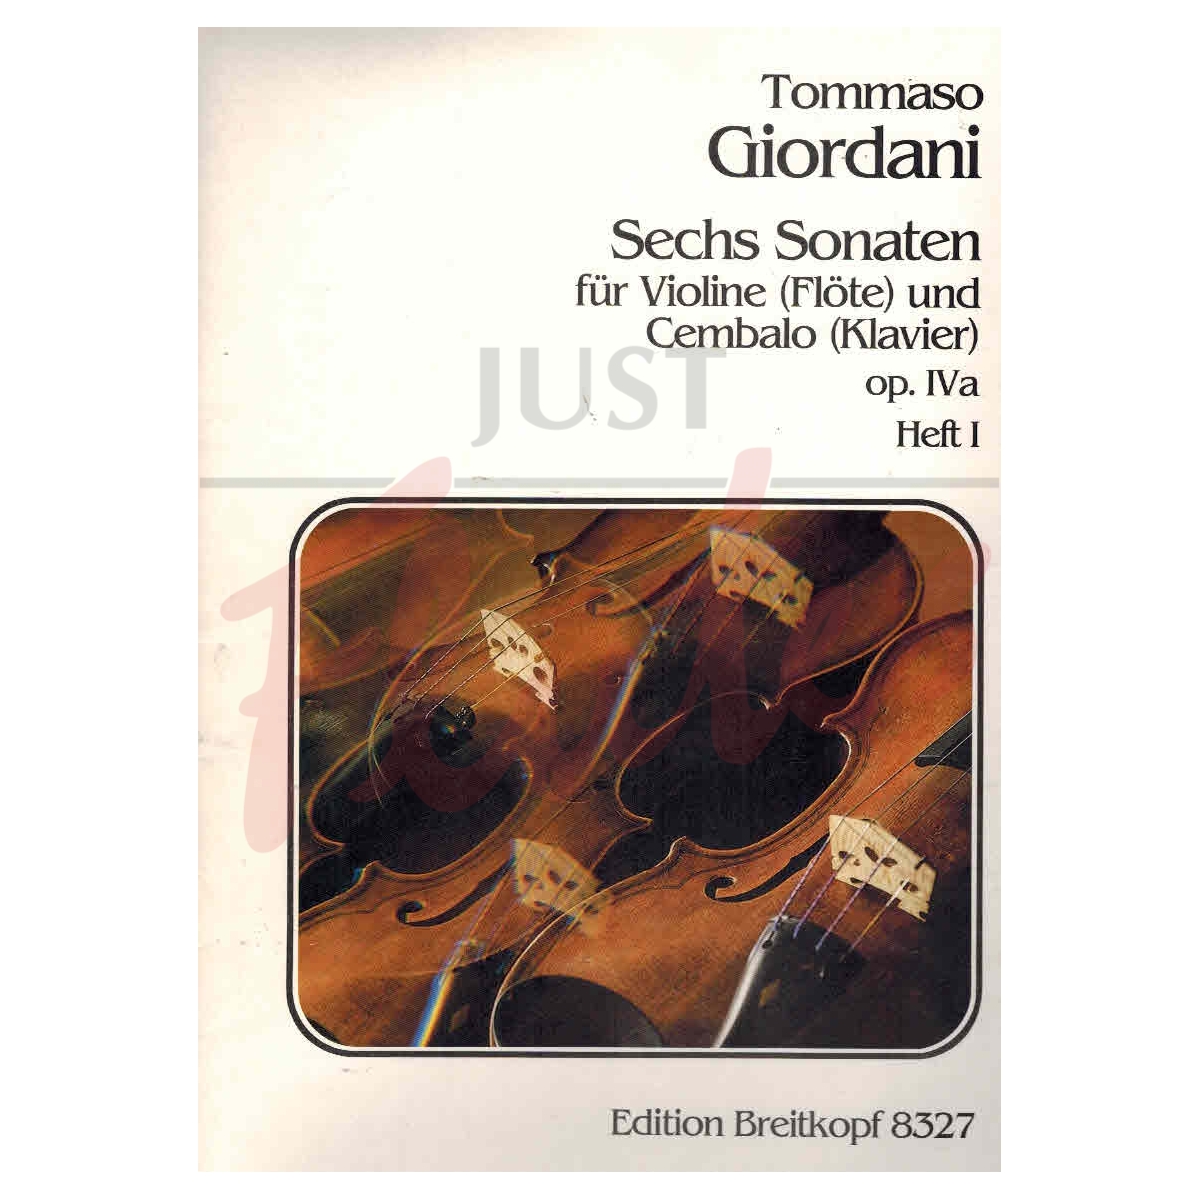 6 Sonatas Op IVa Book 1